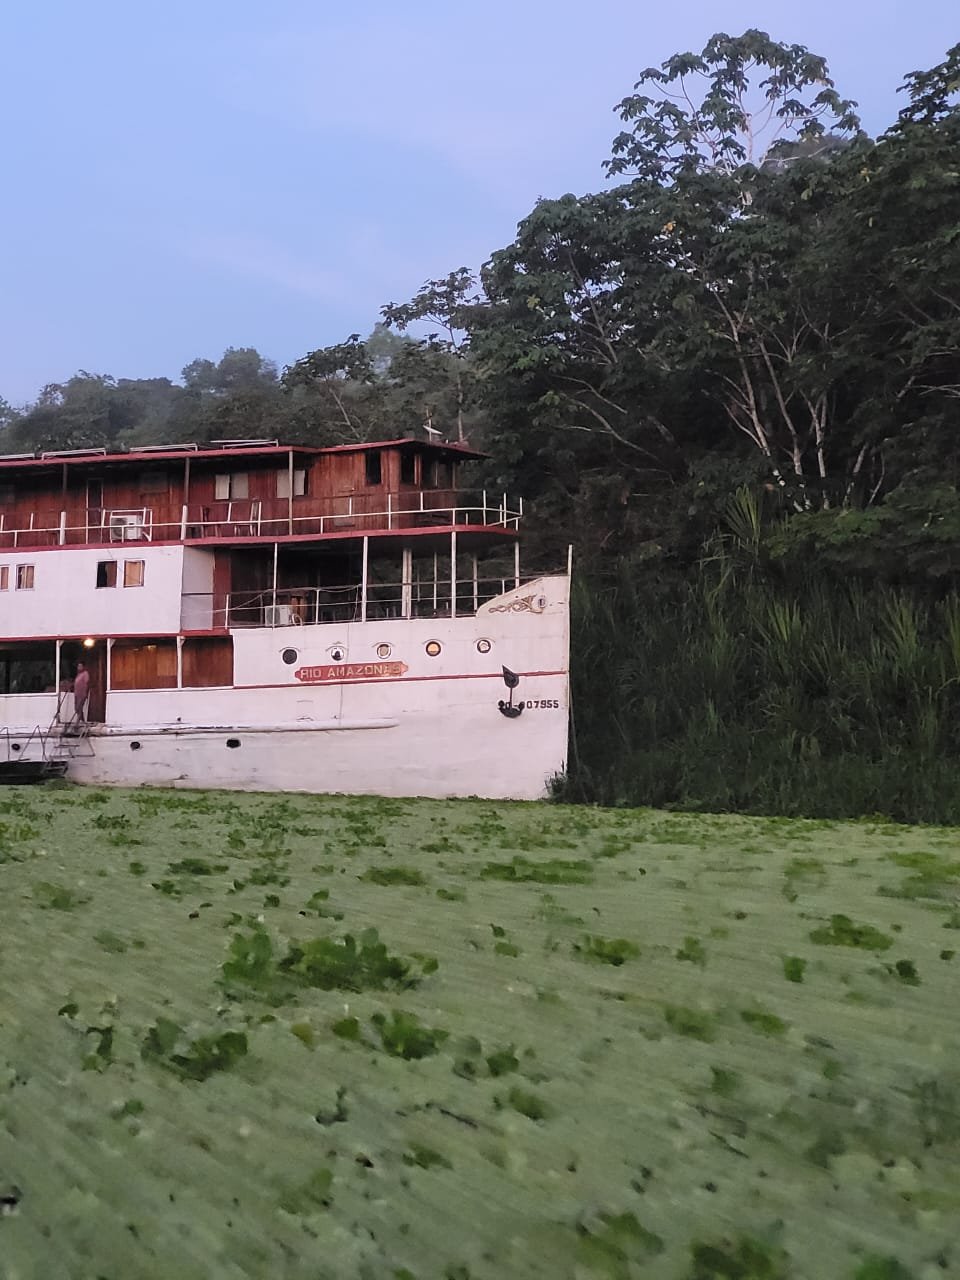 Nixon x 1 - Rio Amazonas Research Station - Rio Yarapa, Loreto - Historic Boat Accommodation.jpeg